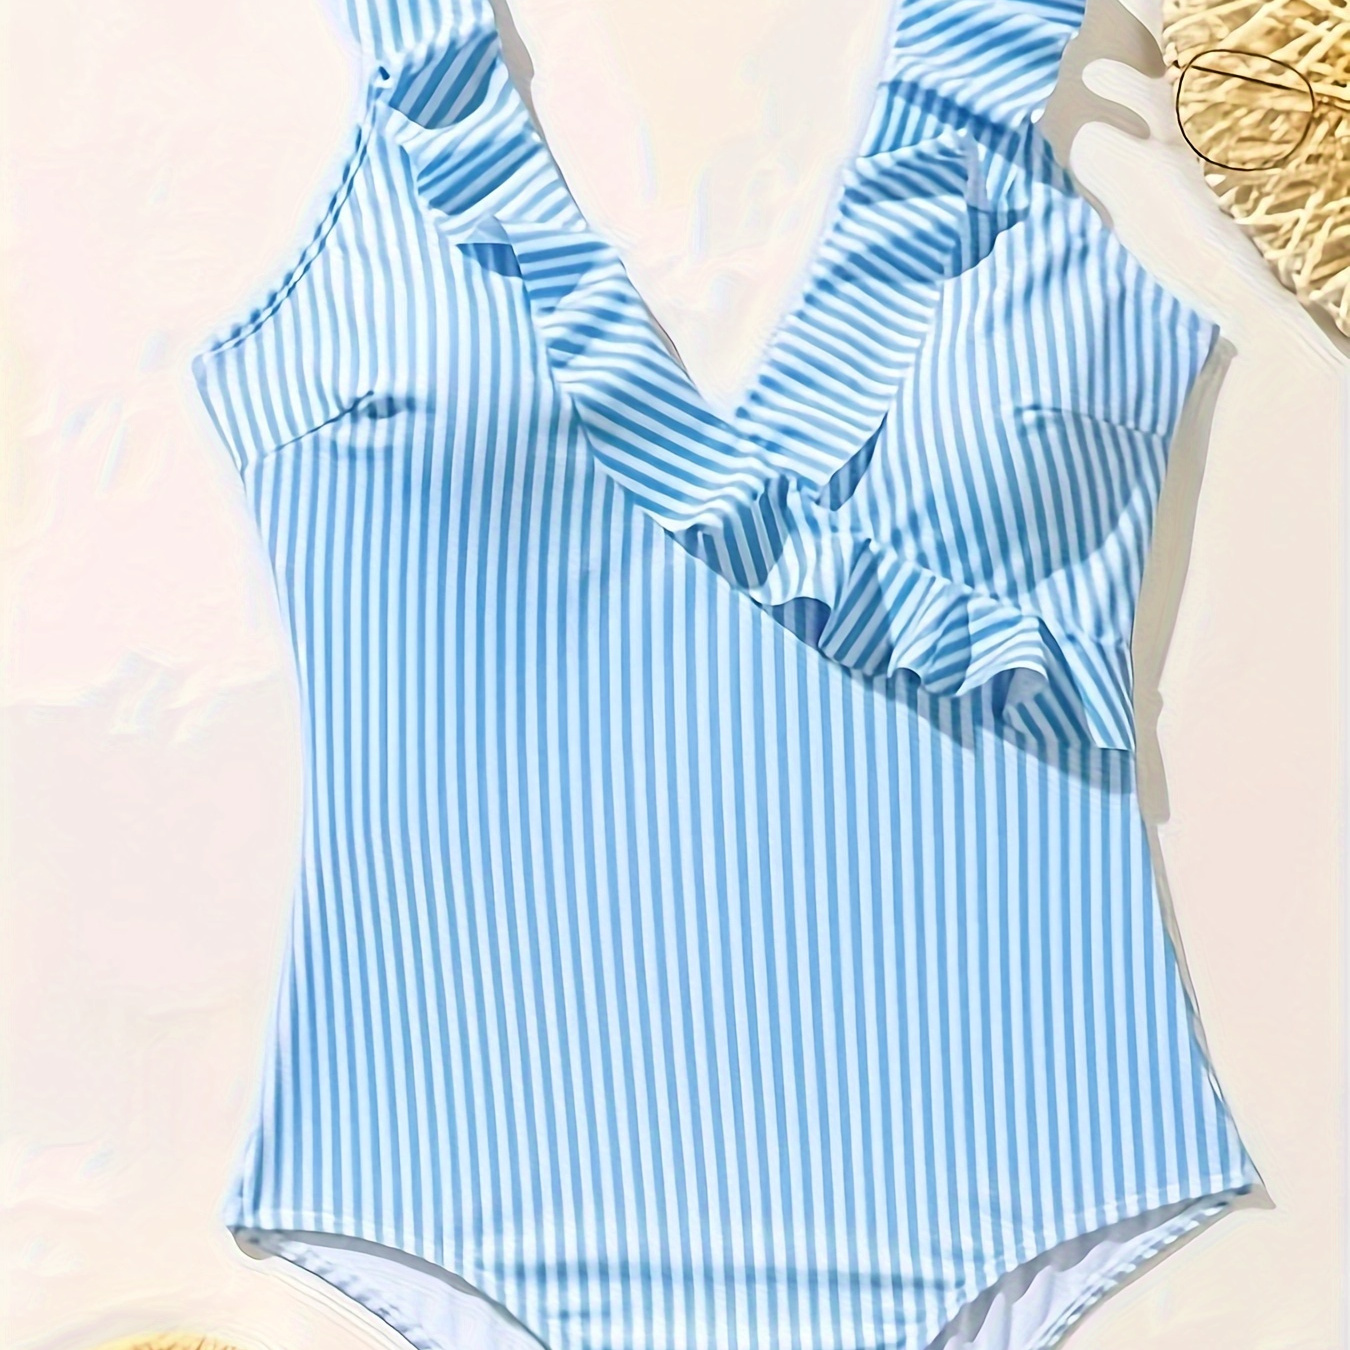 

Striped Print One-piece Swimsuit, Ruffle Hem Tummy Control High Cut Bathing Suits, Women's Swimwear & Clothing